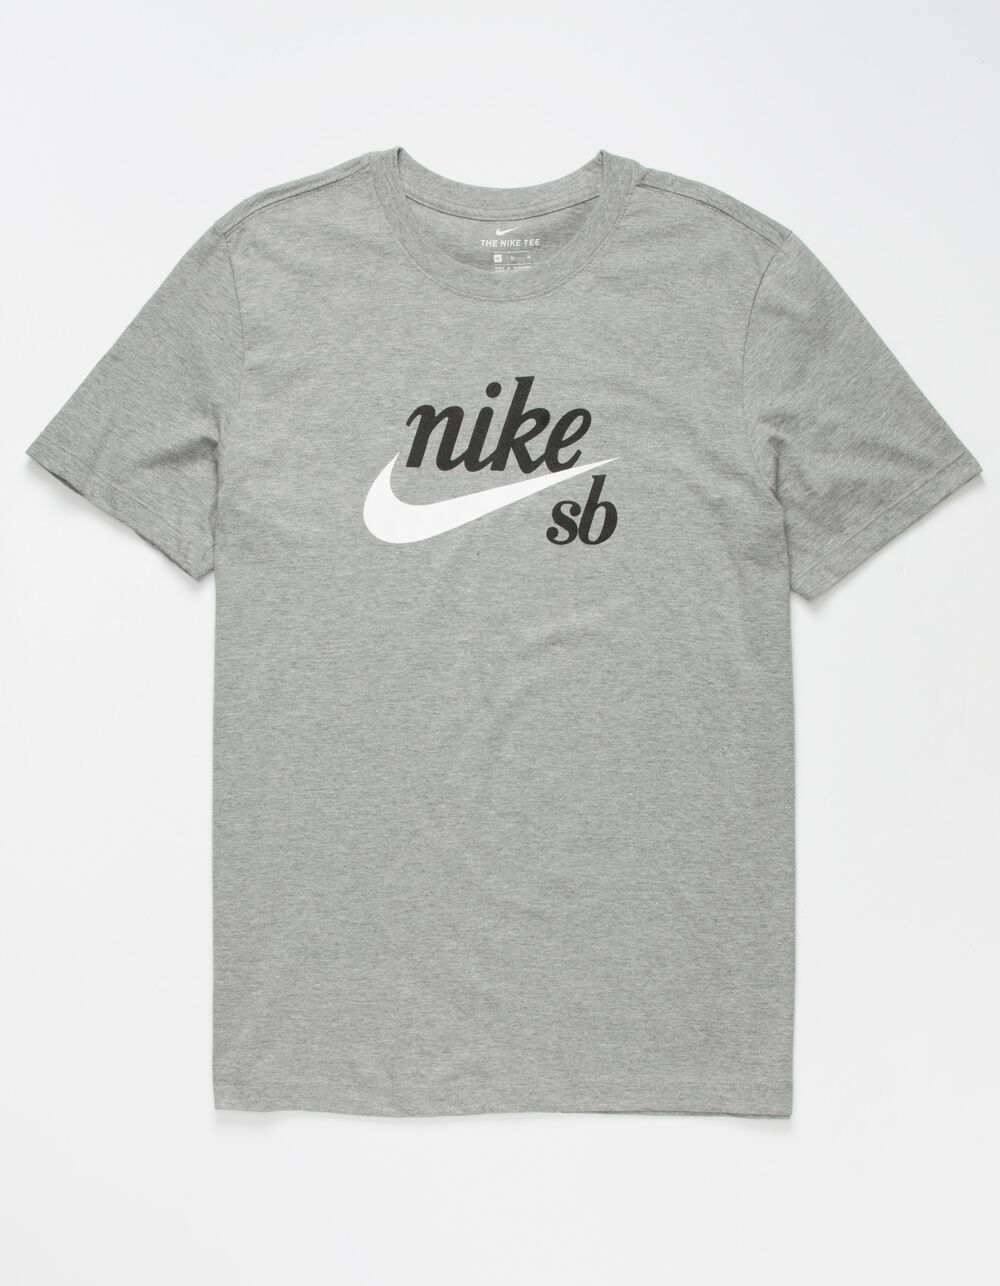 NIKE SB Craft Logo Mens T-Shirt - HEATHER GRAY | Tillys